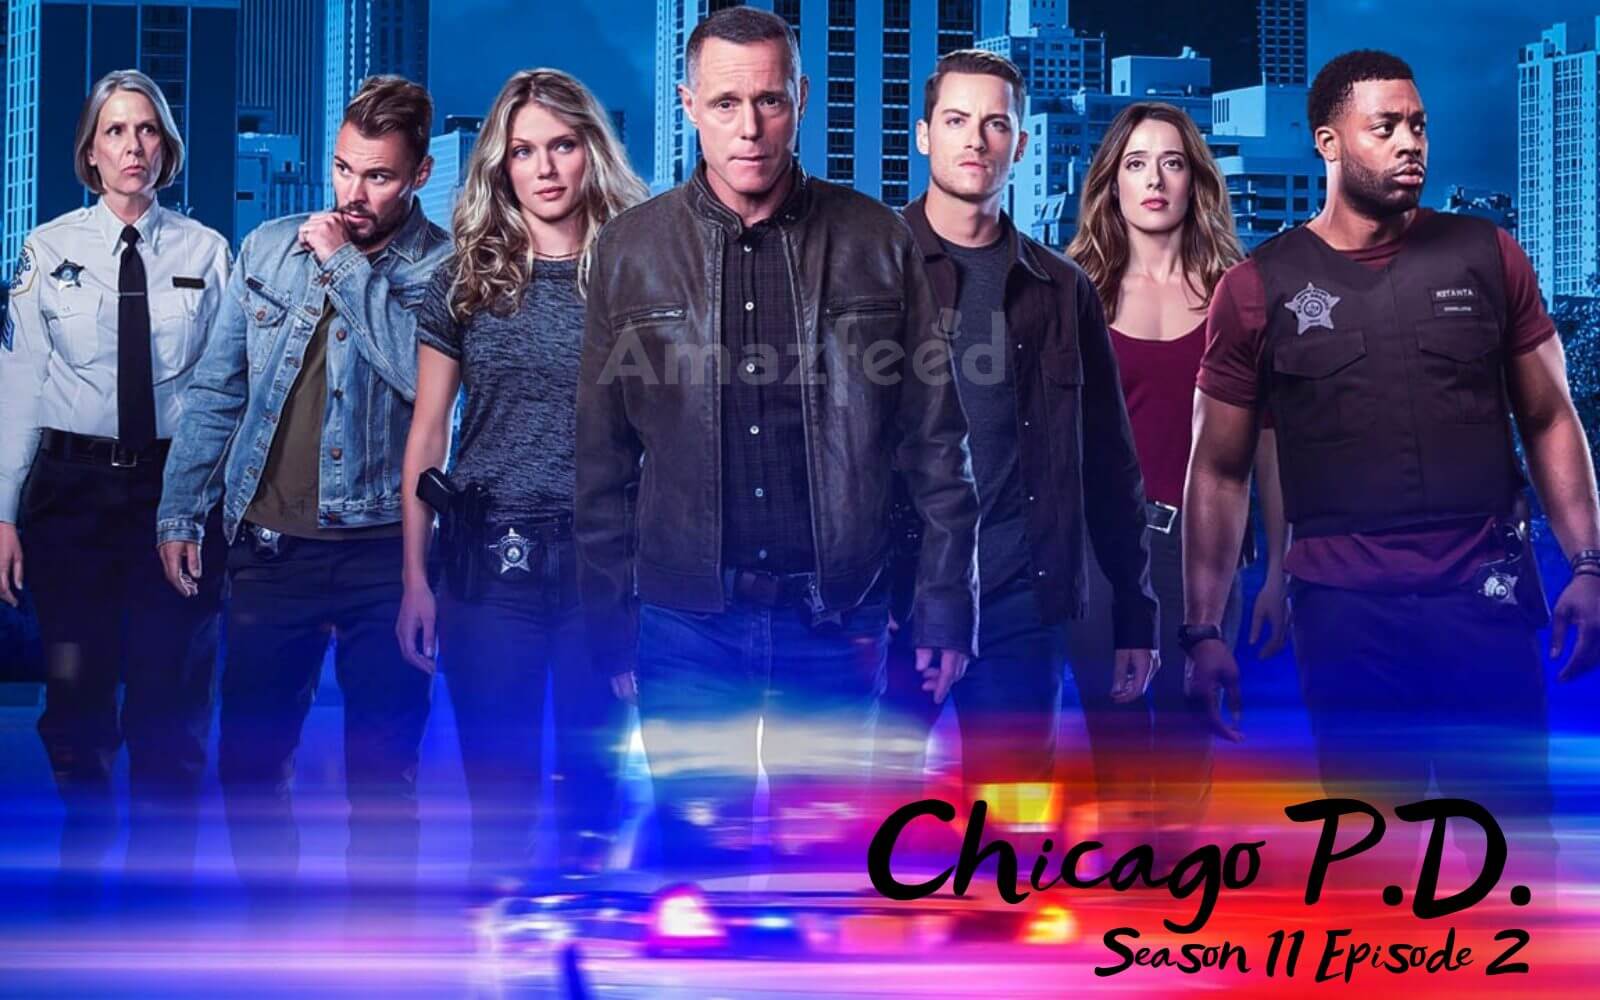 Chicago P.D. Season 11 Episode 2 release date